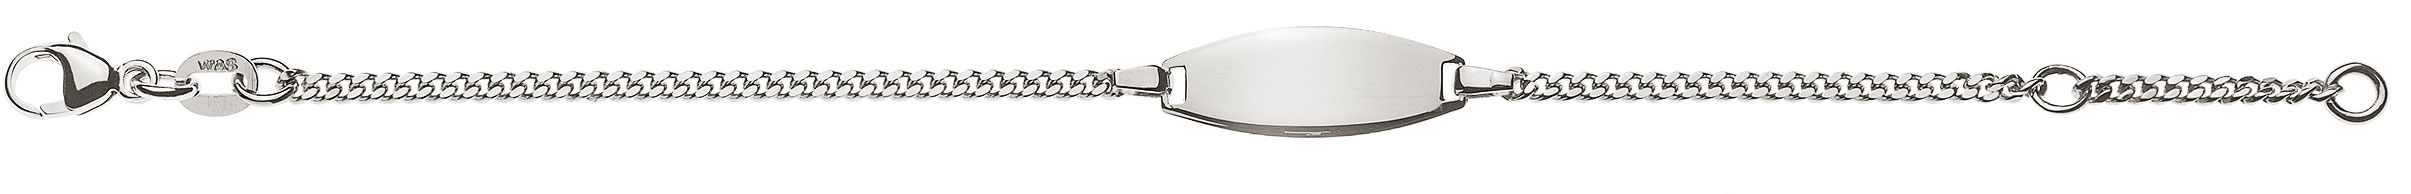 AURONOS Prestige ID-Bracelet en or blanc 18k Chaîne blindée polie 18cm